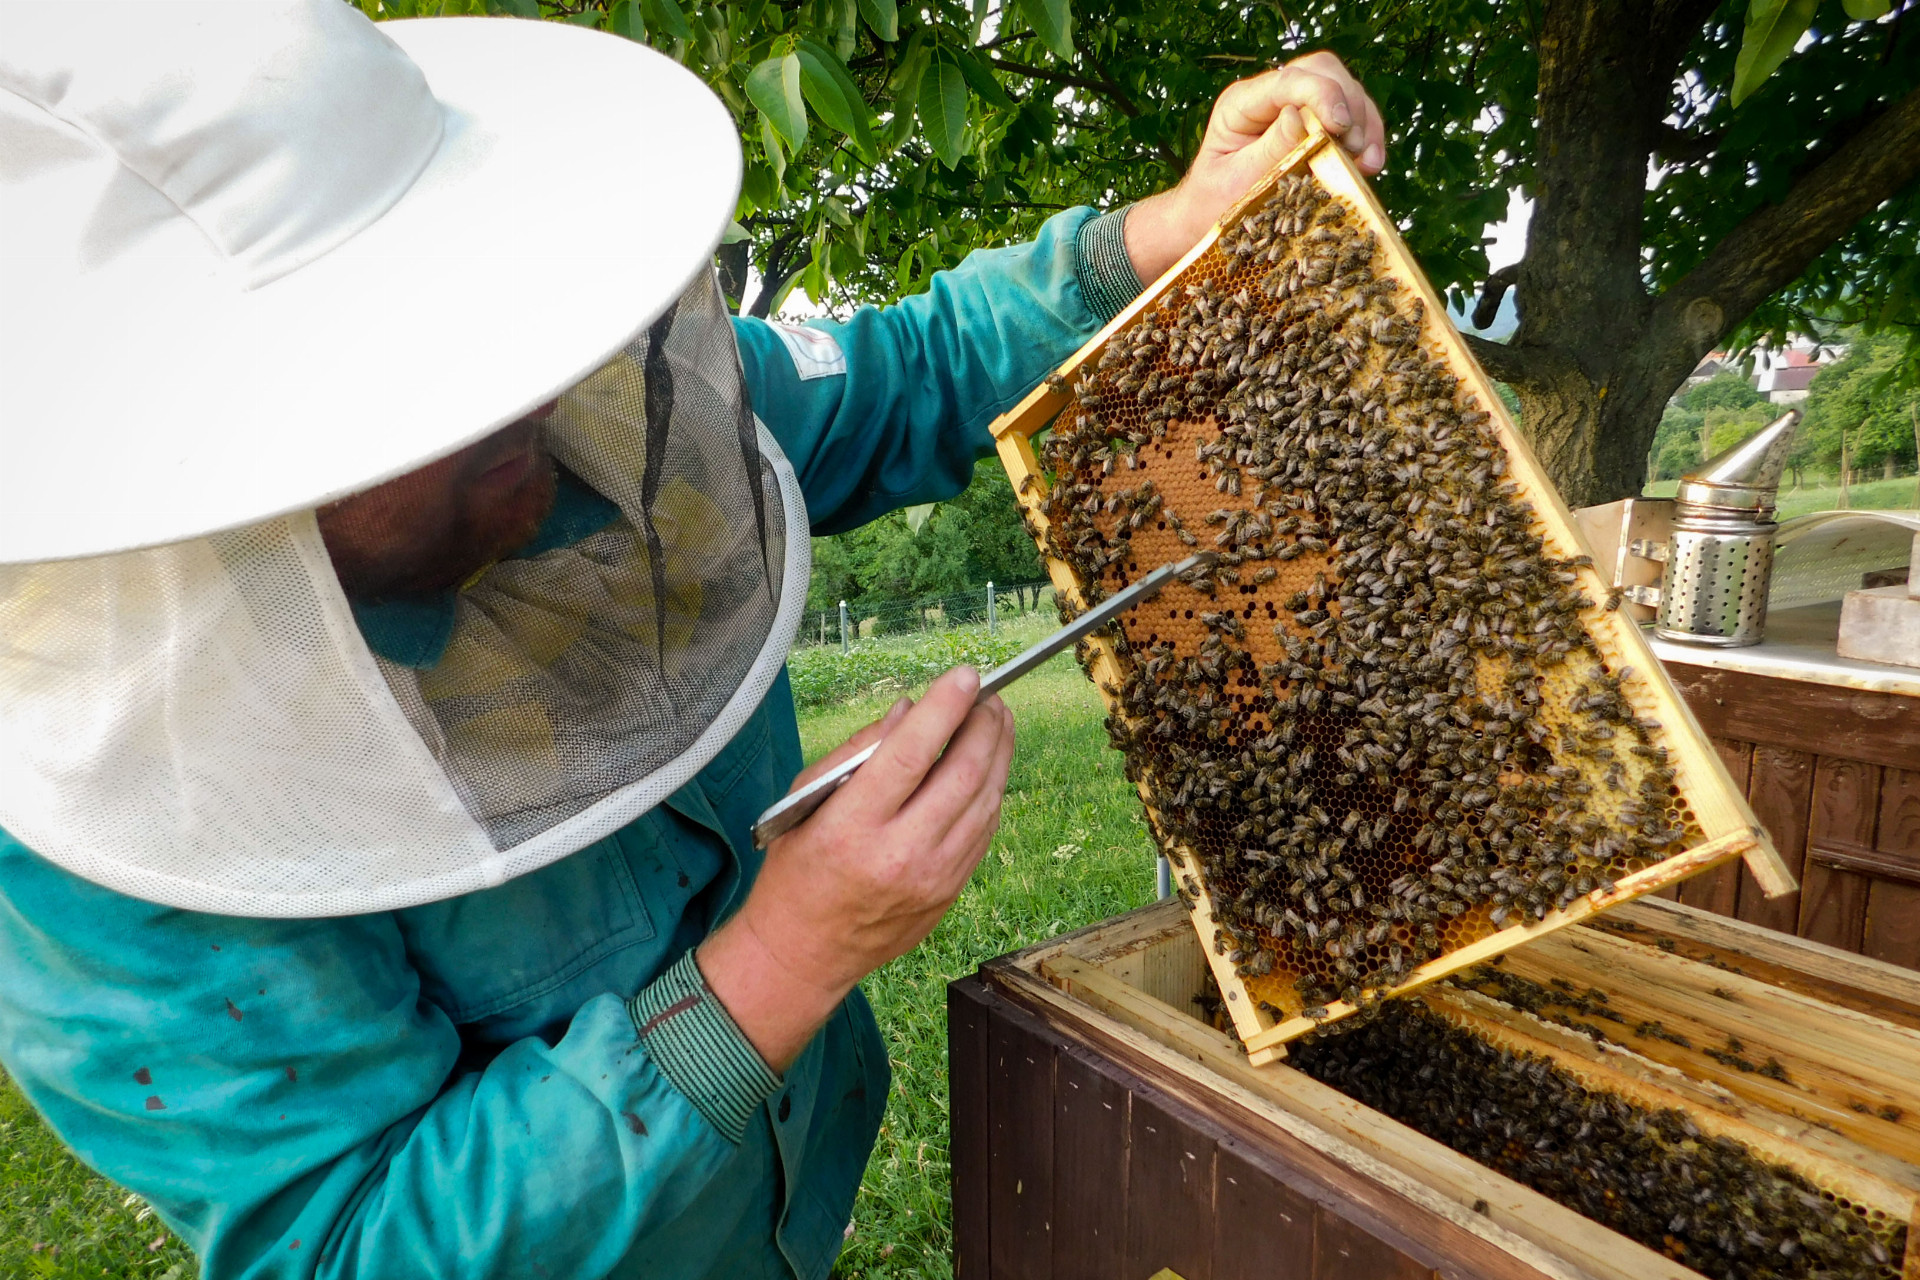 Mor včelieho plodu zasiahol aj obce Strelníky pri Banskej Bystrici. Tamojší včelár Miroslav Majer kontroluje svoje včelstvá.